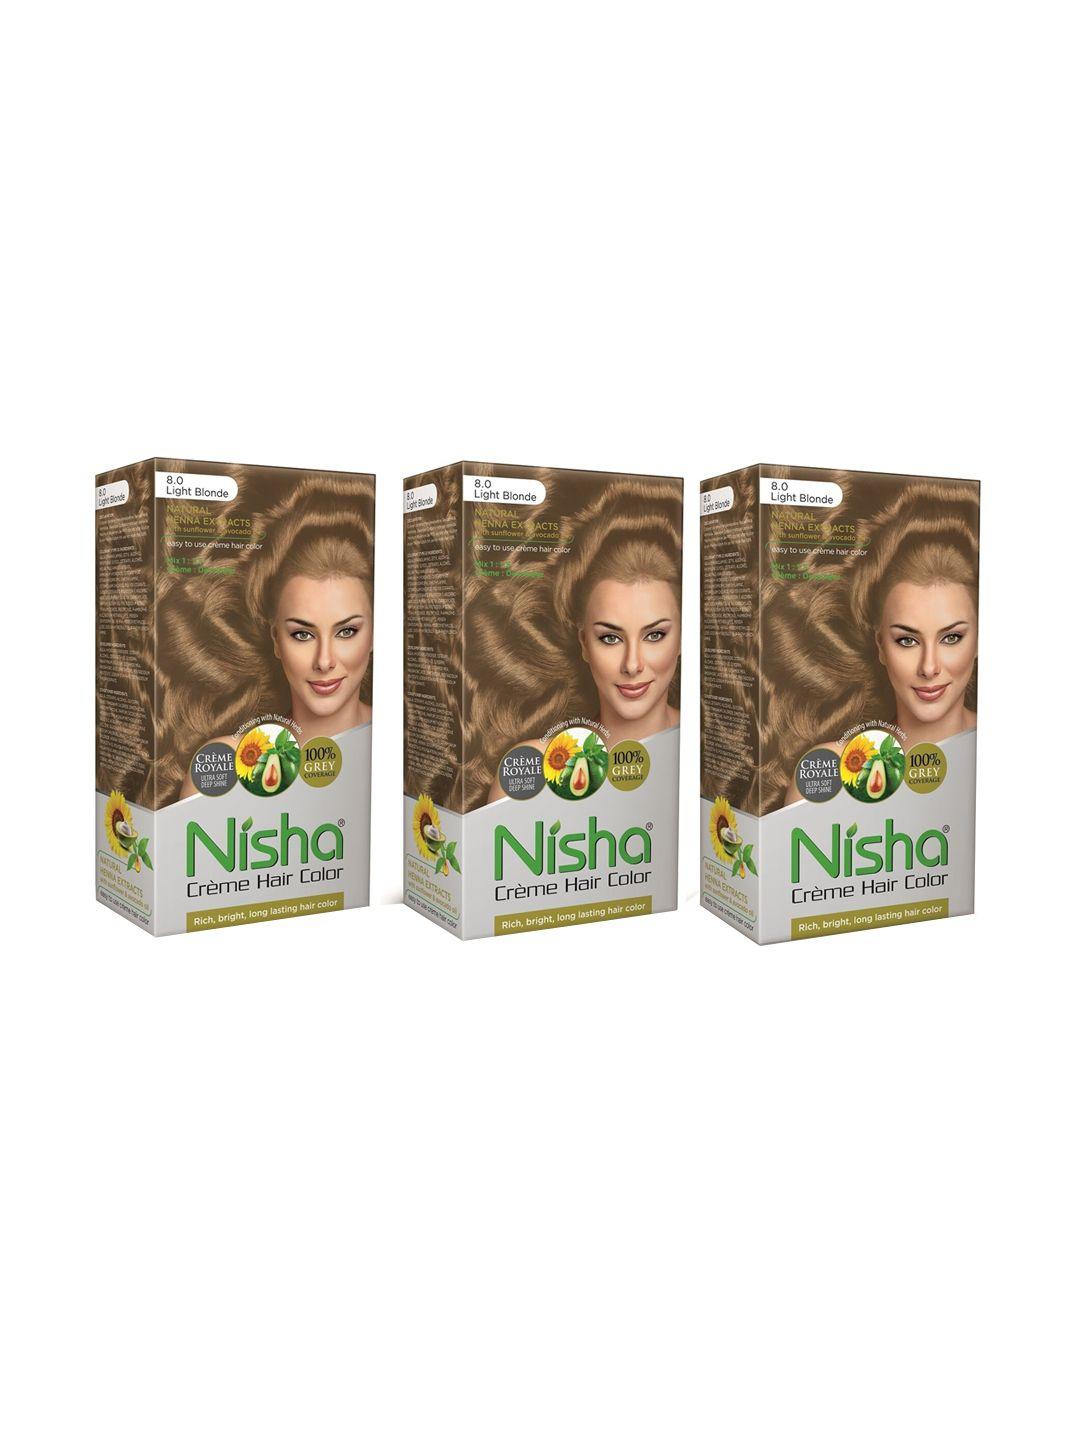 nisha unisex gold pack of 3 creme hair color 150gm each- light blonde